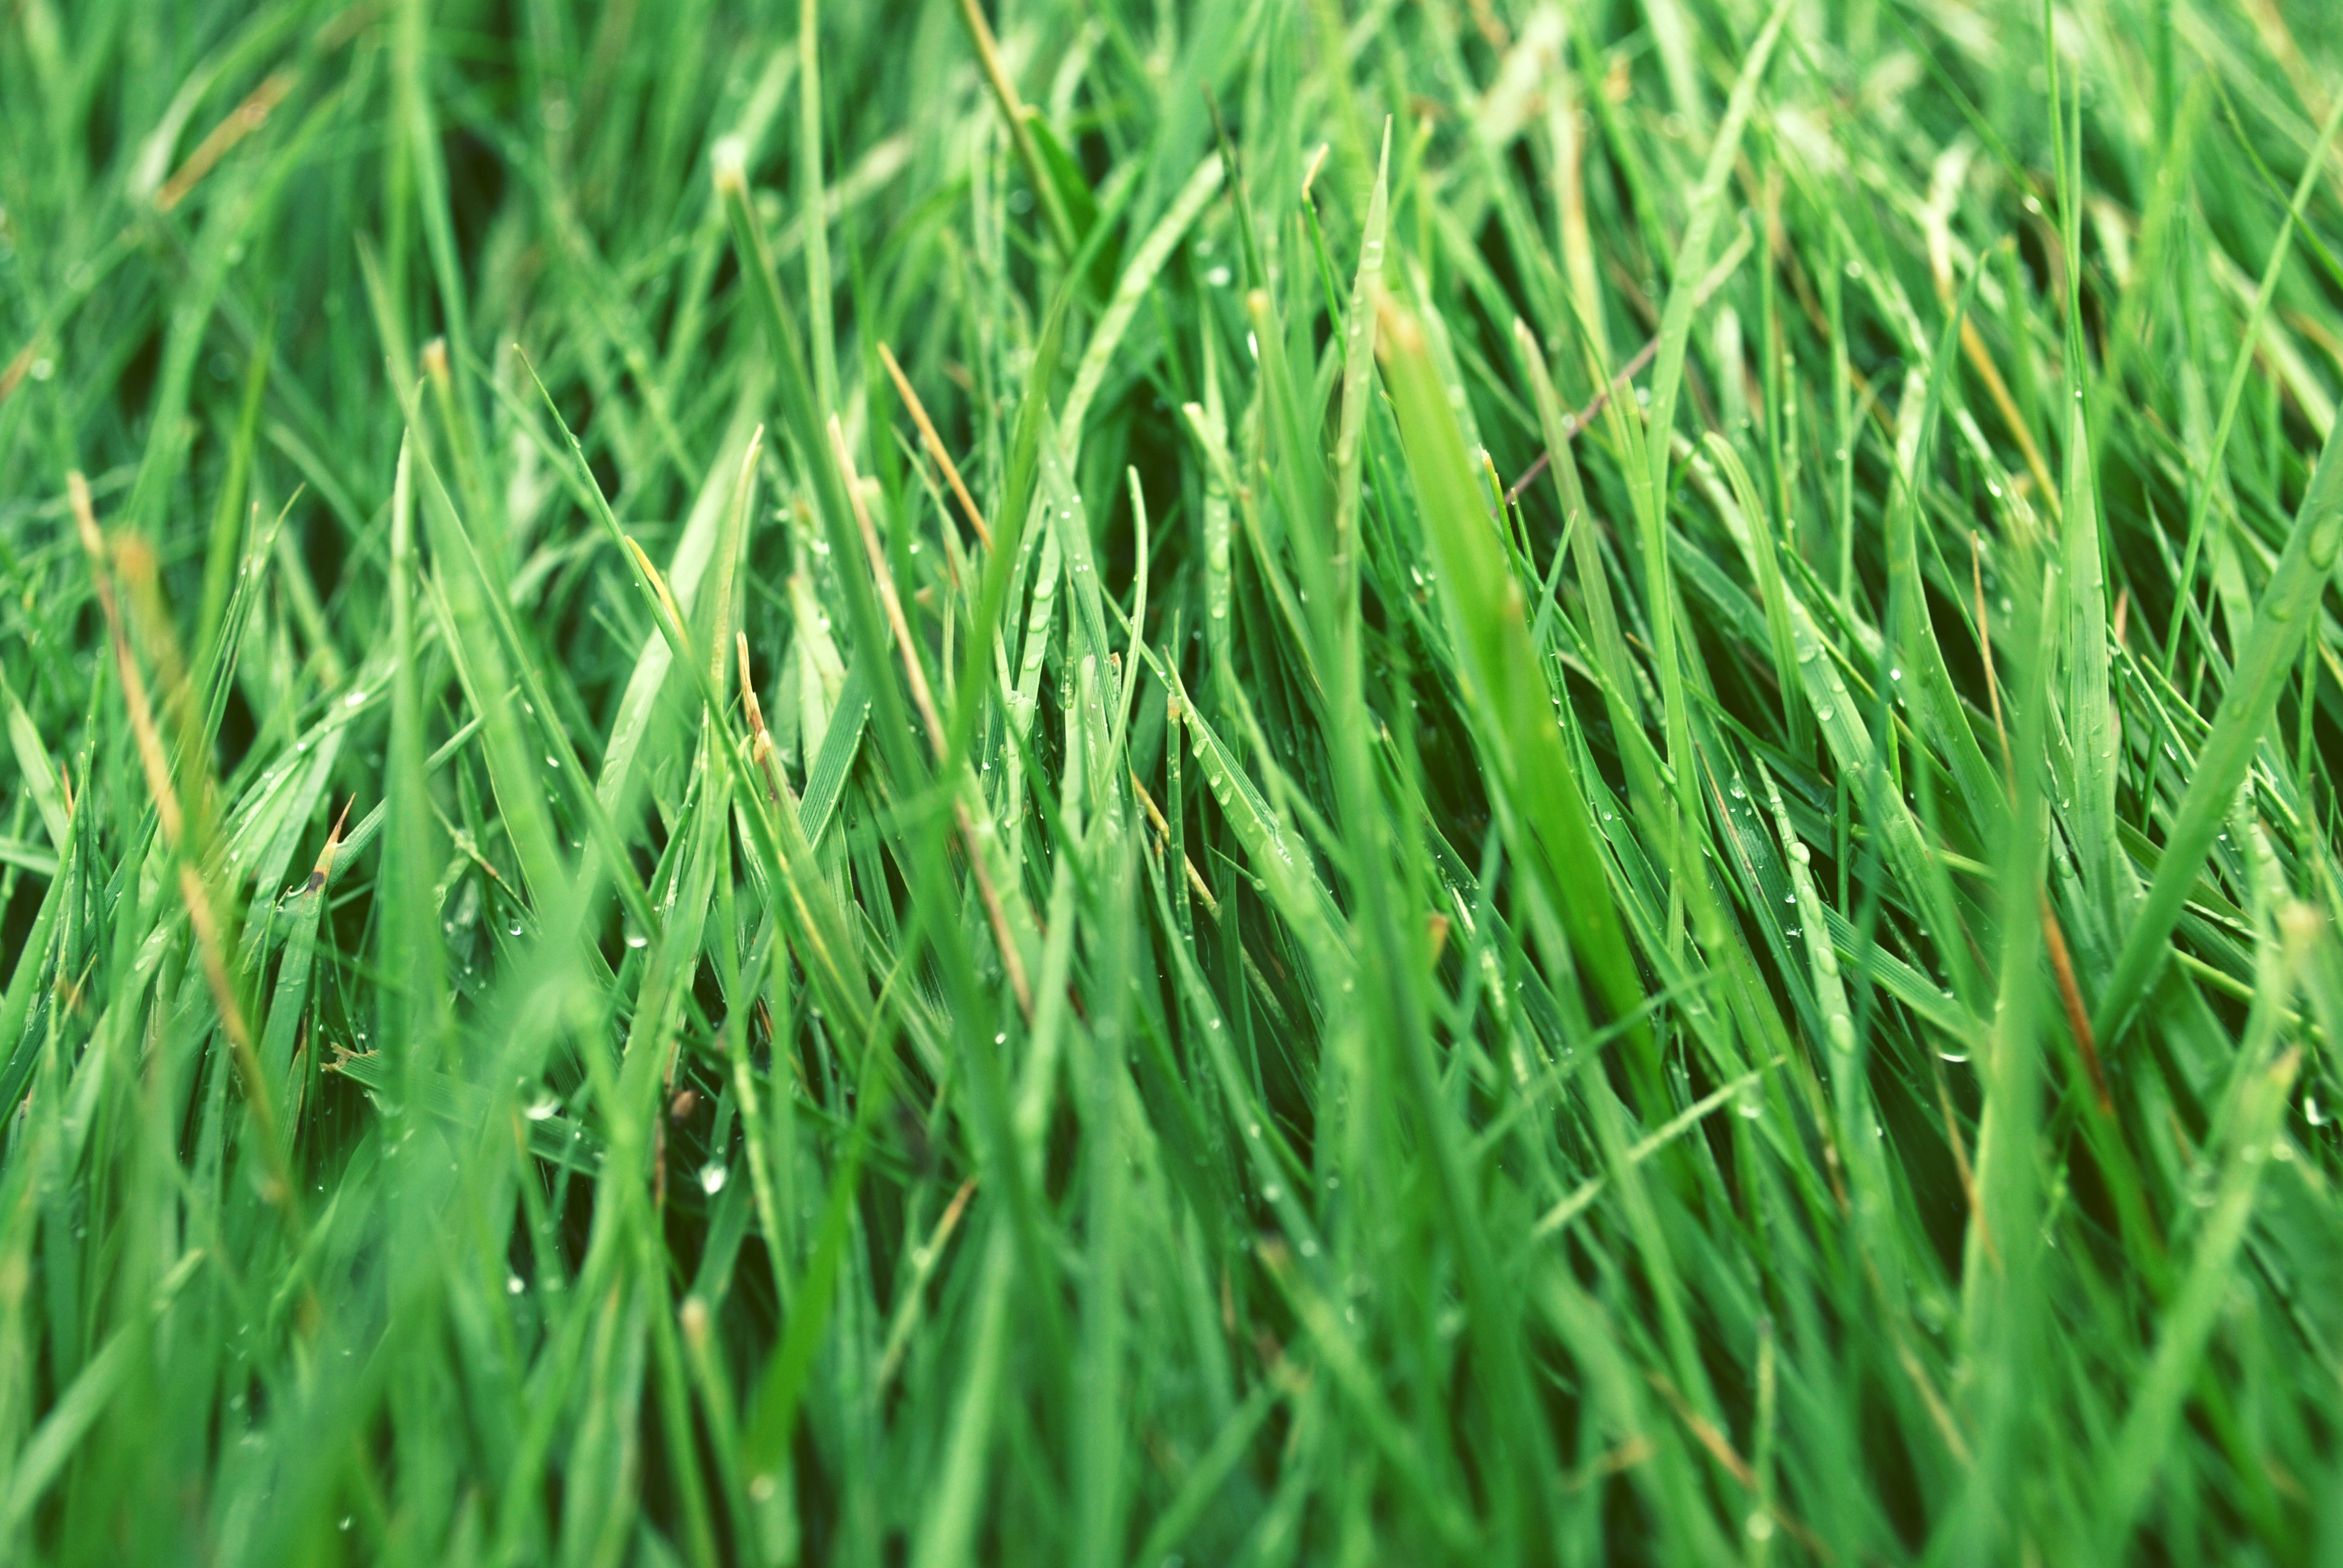 Grass Blades image image - Free stock photo - Public Domain photo - CC0